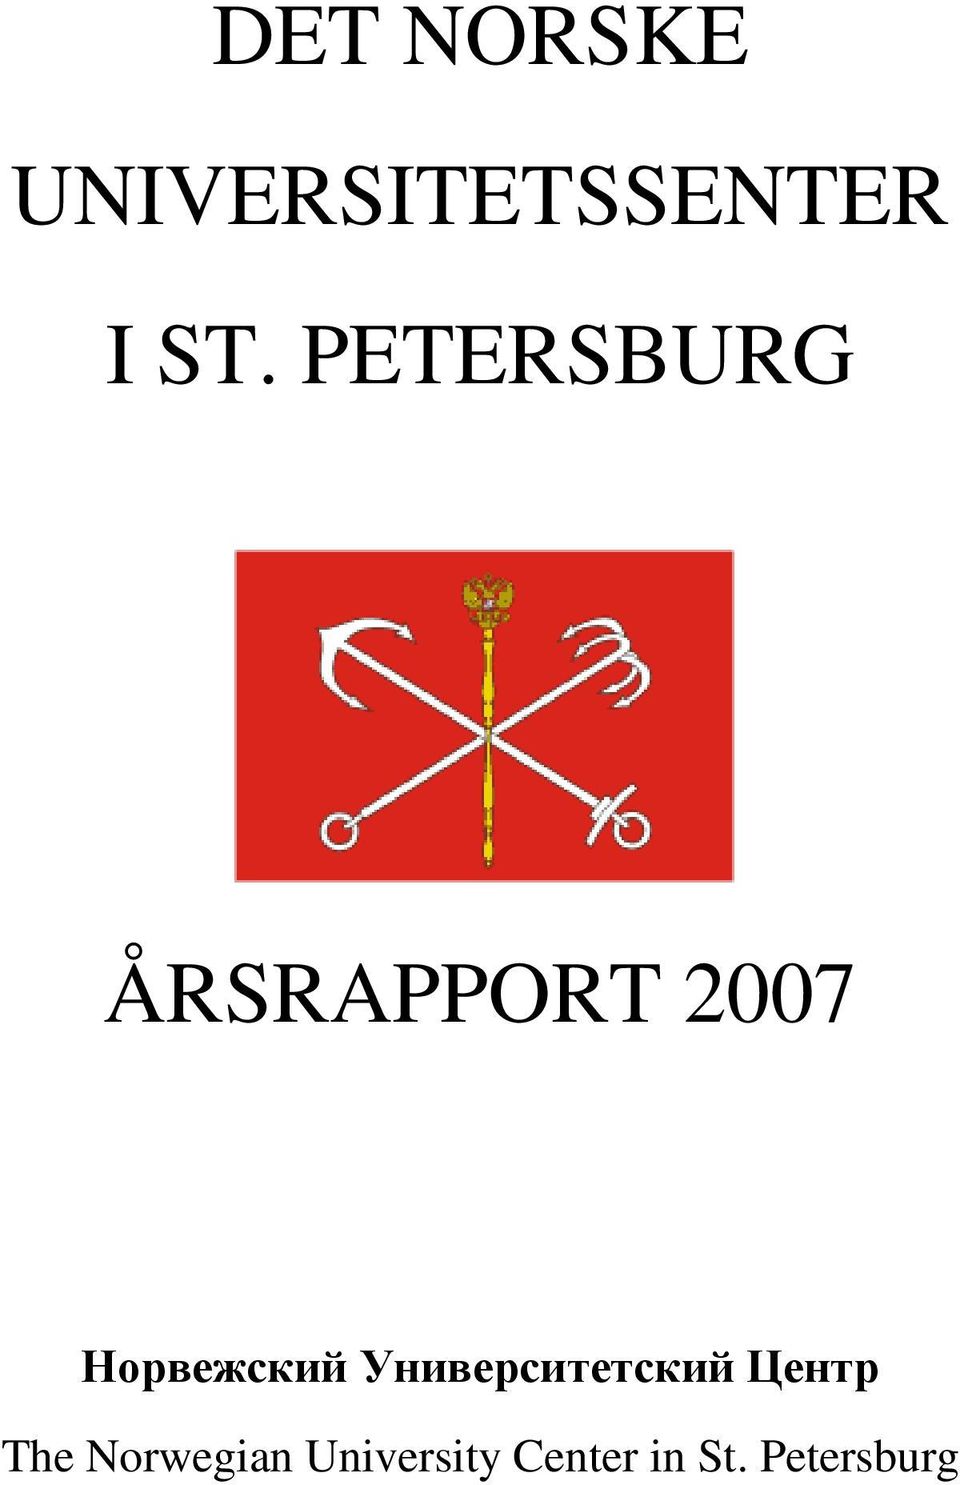 PETERSBURG ÅRSRAPPORT 2007